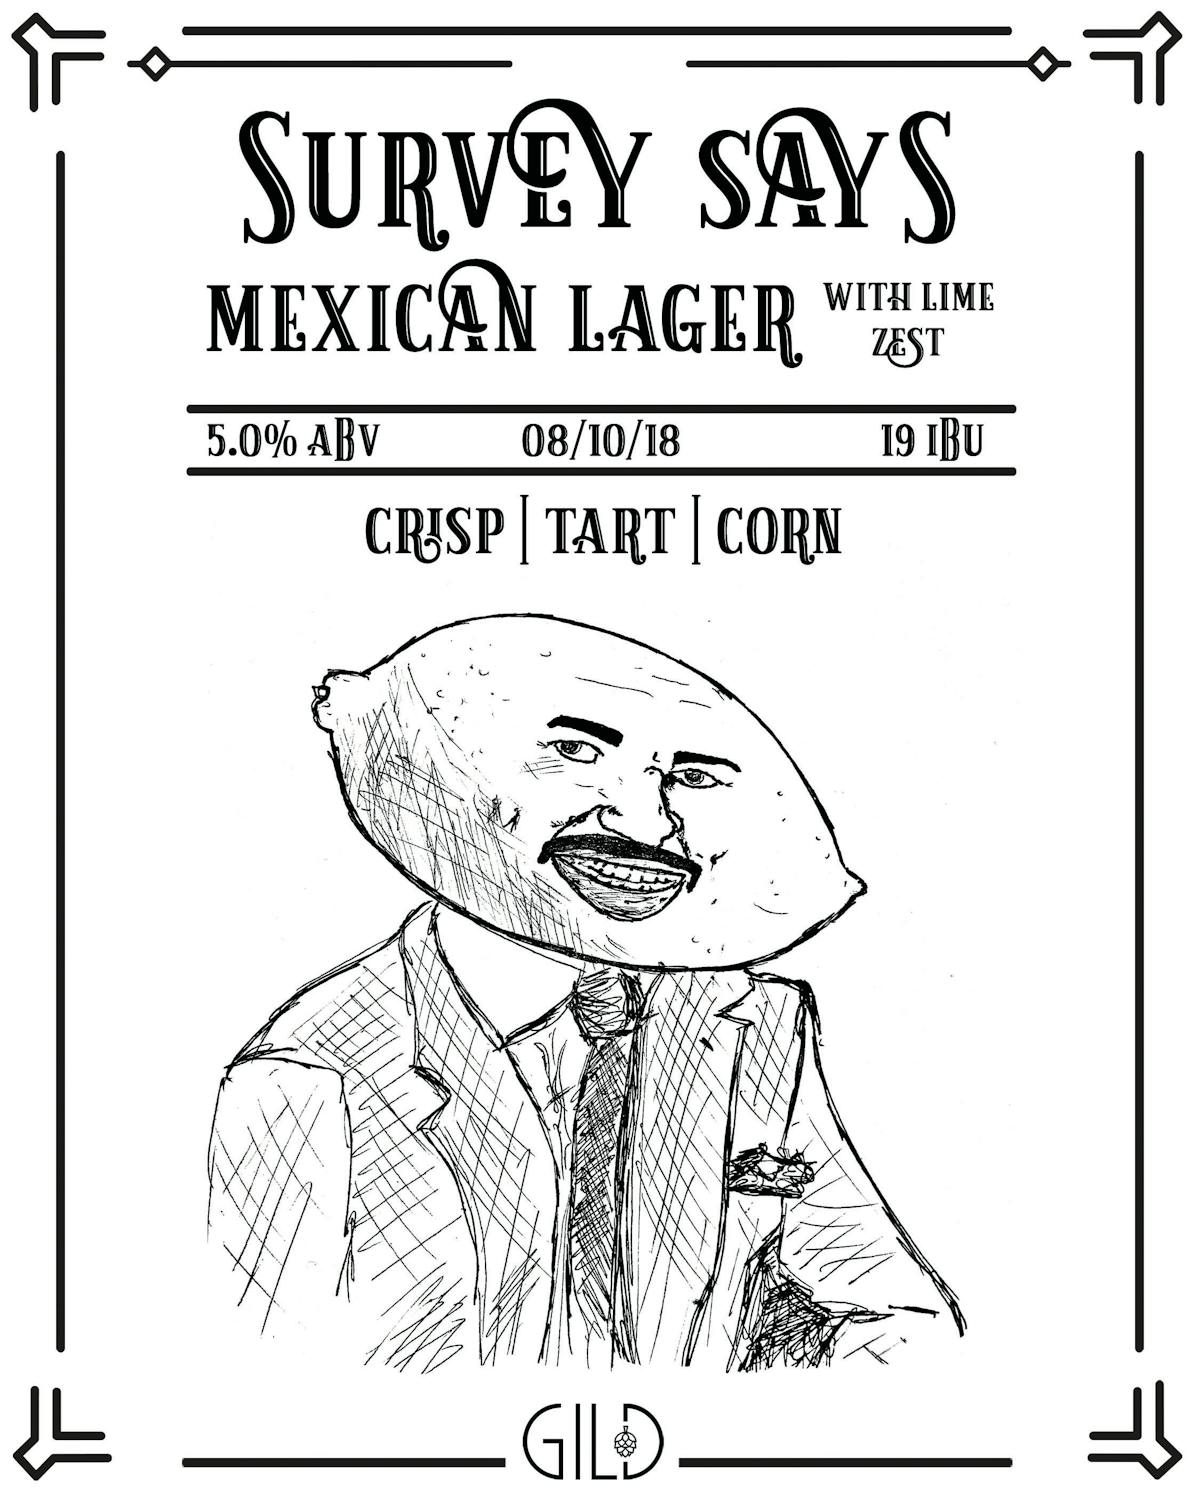 survey says